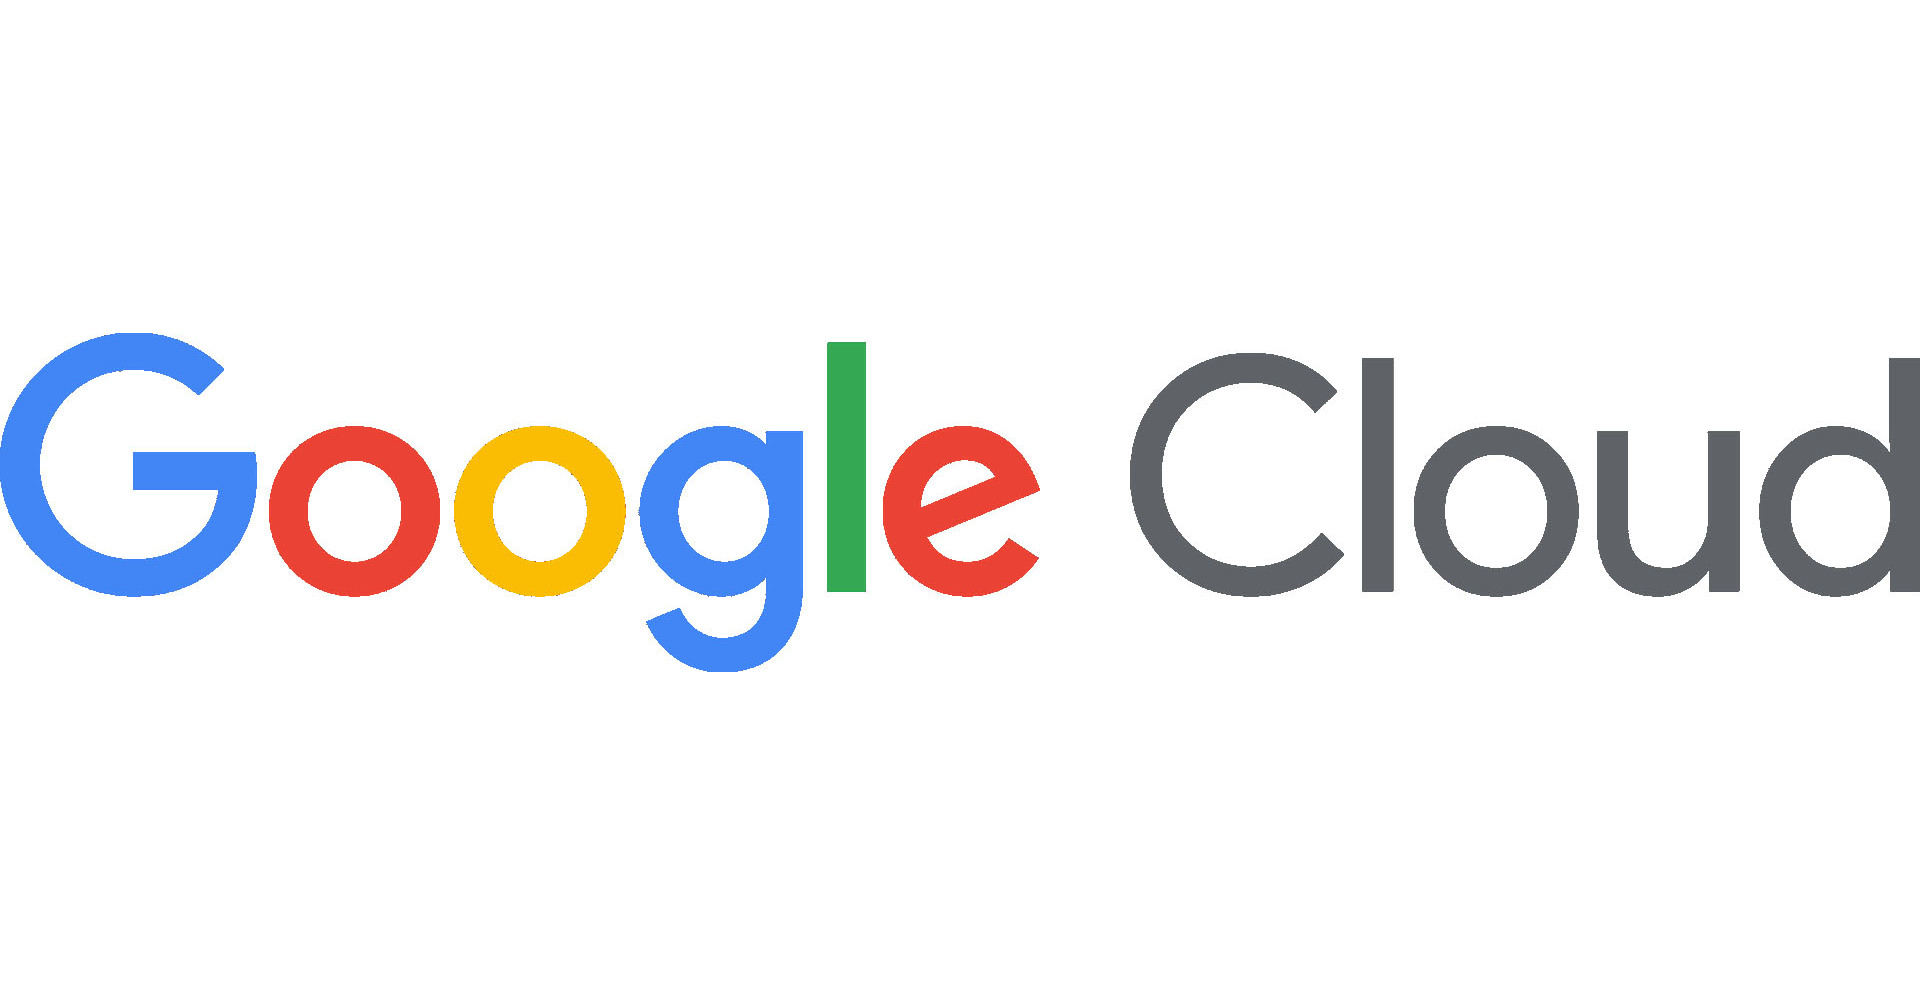 Google Cloud Announces New Partnership with Global Fashion Retailer